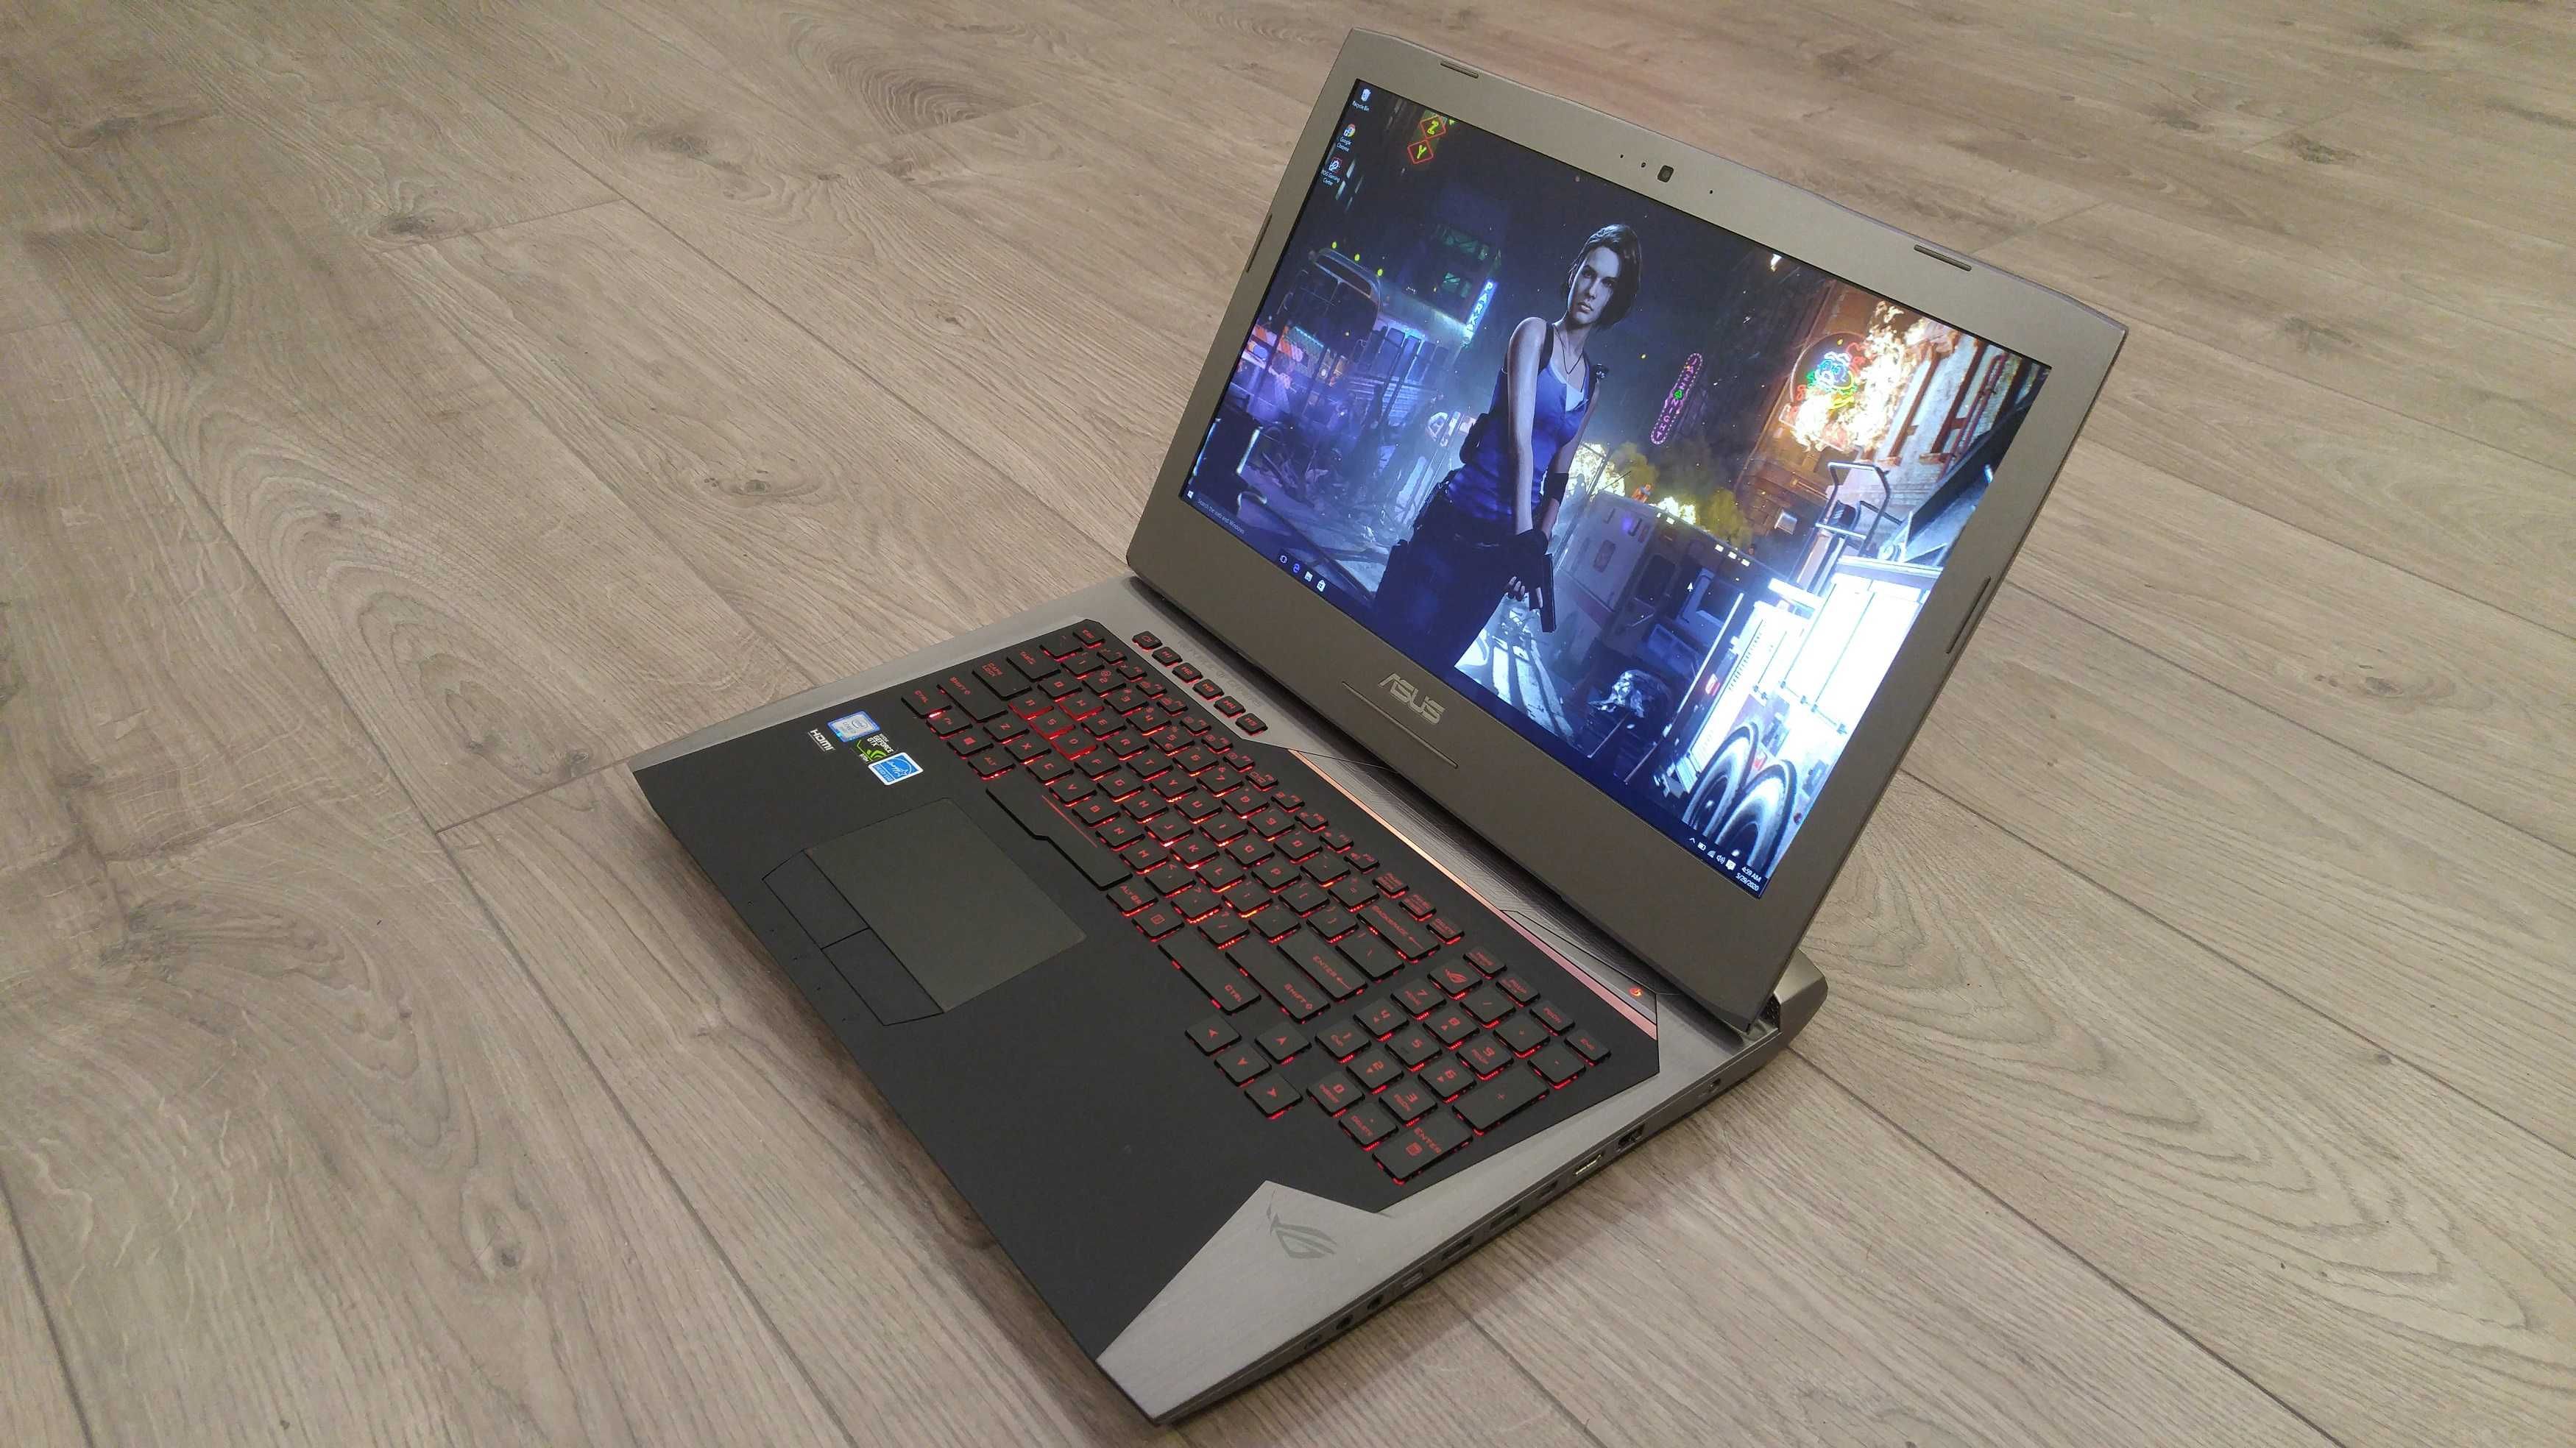 Laptop gaming Asus Rog G752VT , intel core i7- video 6 gb ,17,3 inch